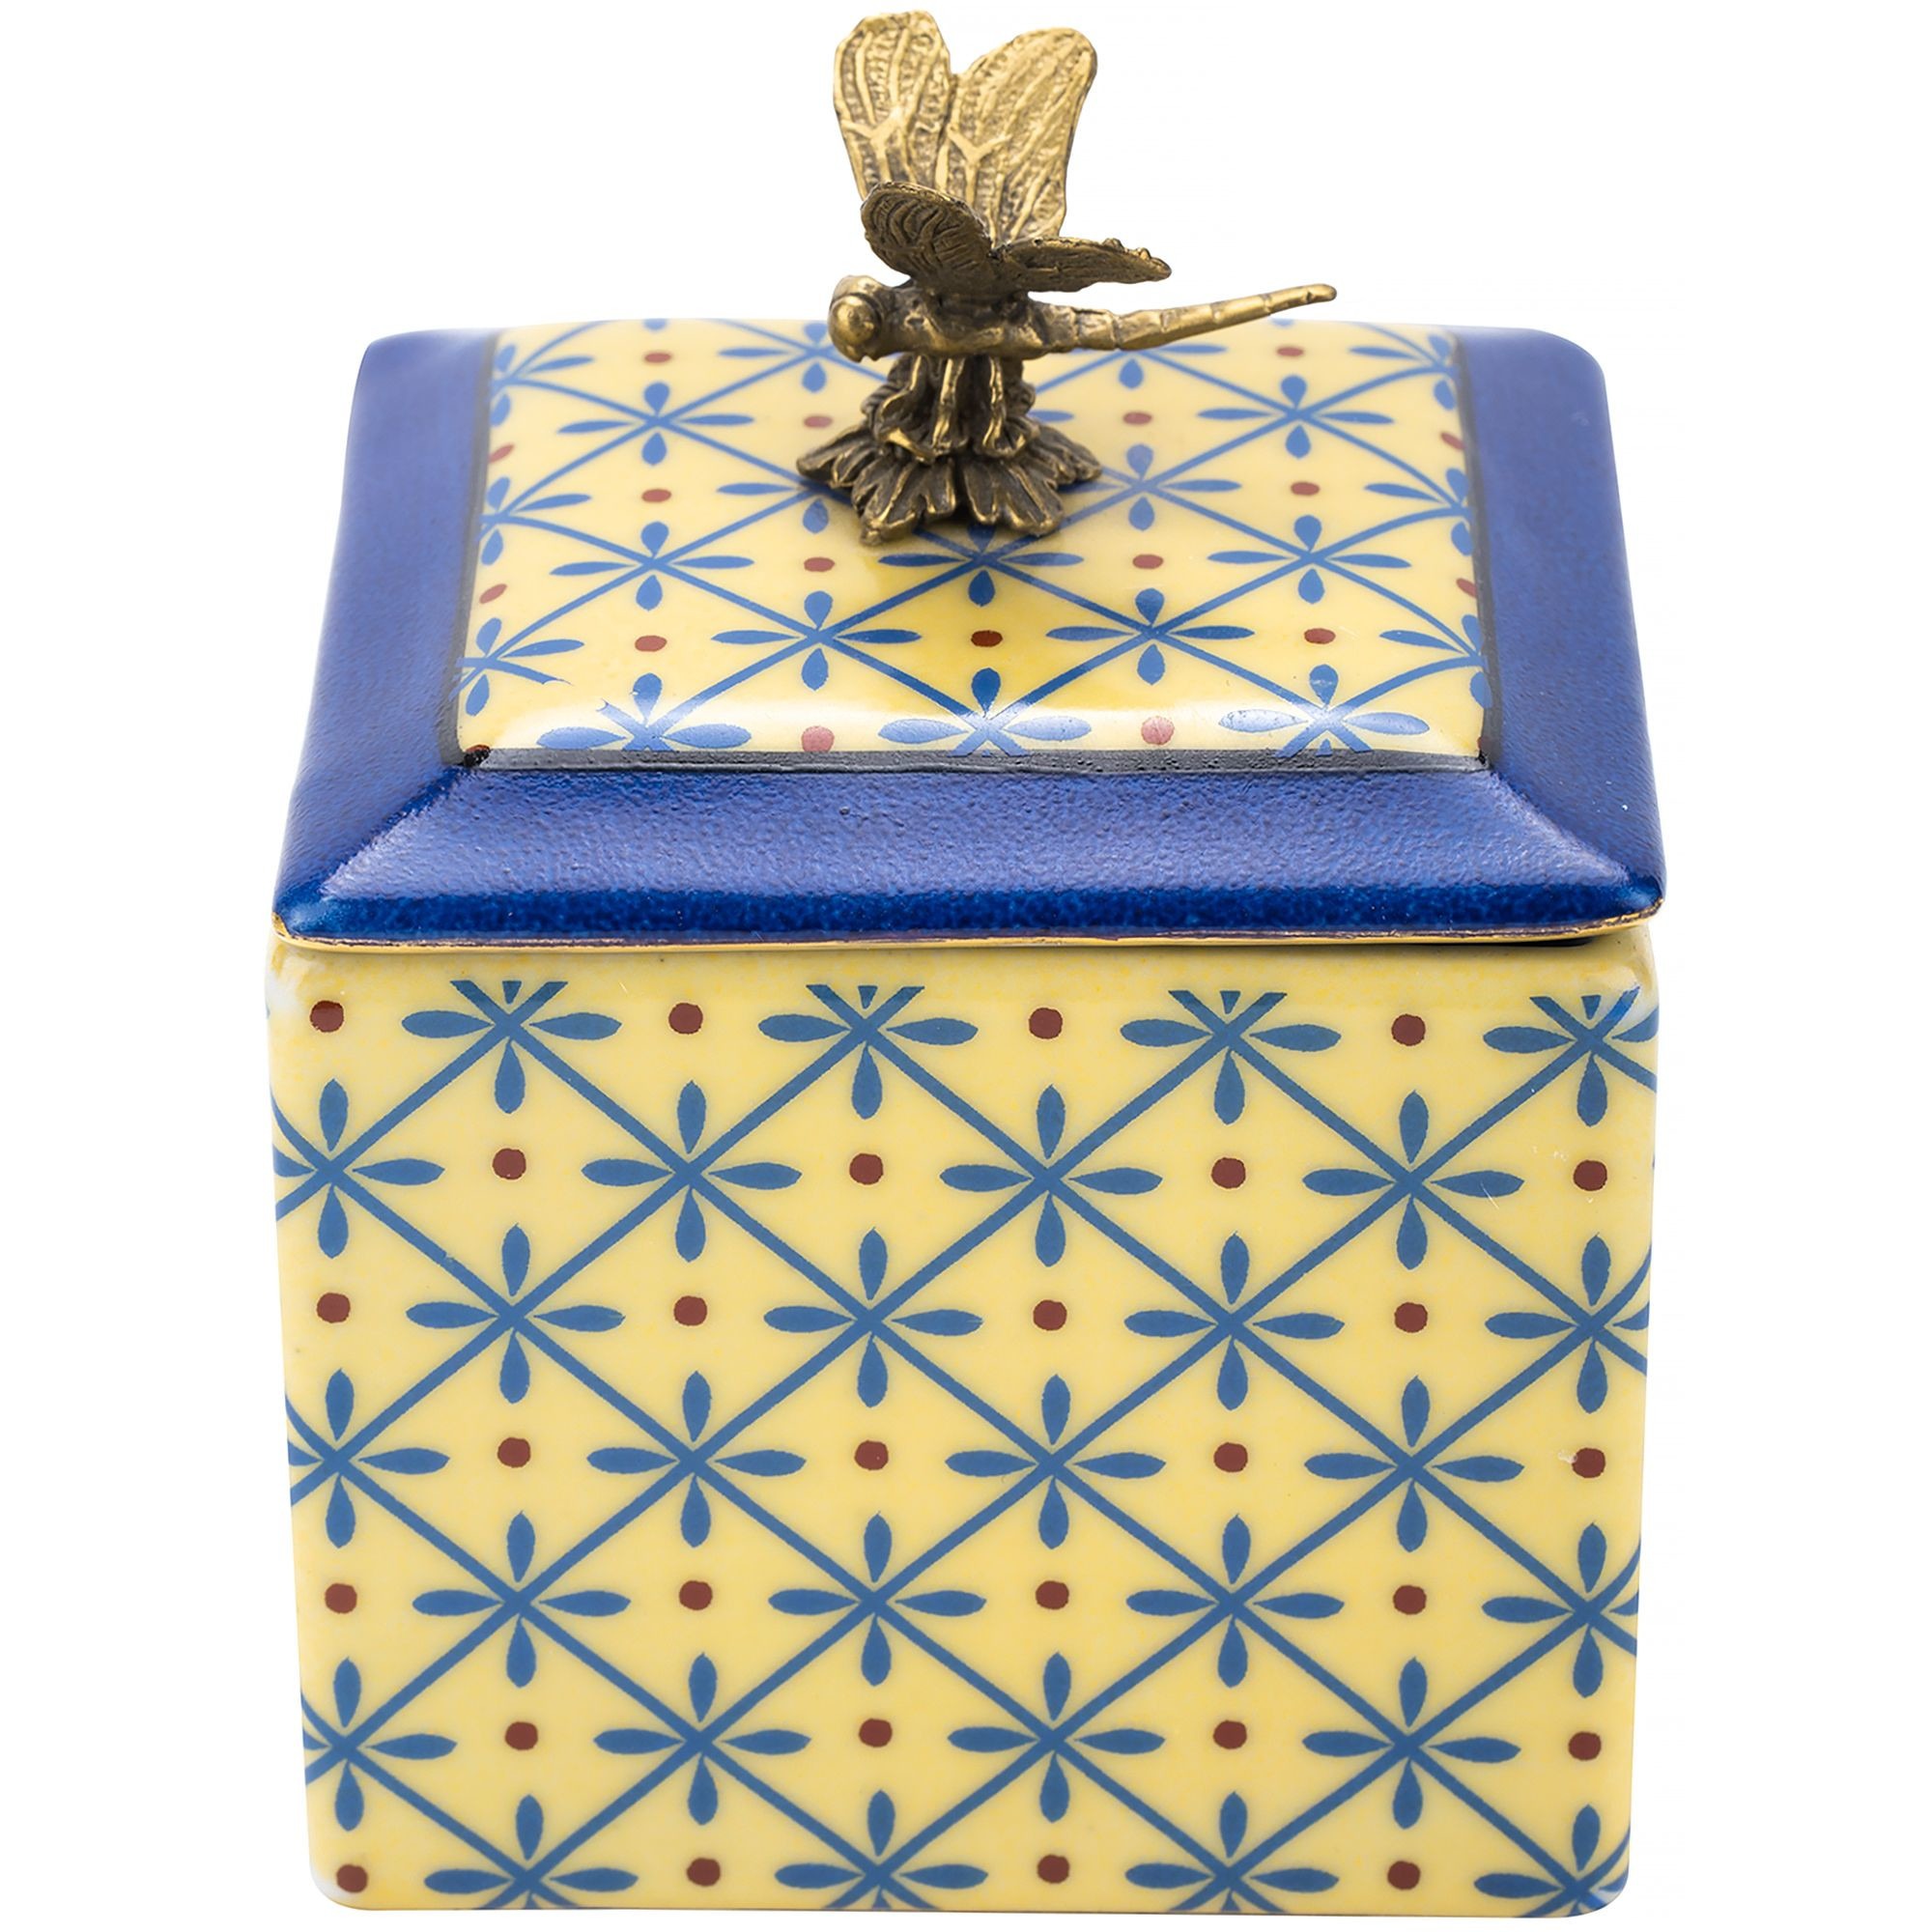 Шкатулка Glasar со стрекозой желтая 9х9х12 см шкатулка glasar синяя с бронзовым ангелом и узорчатым декором 17x17x15 см